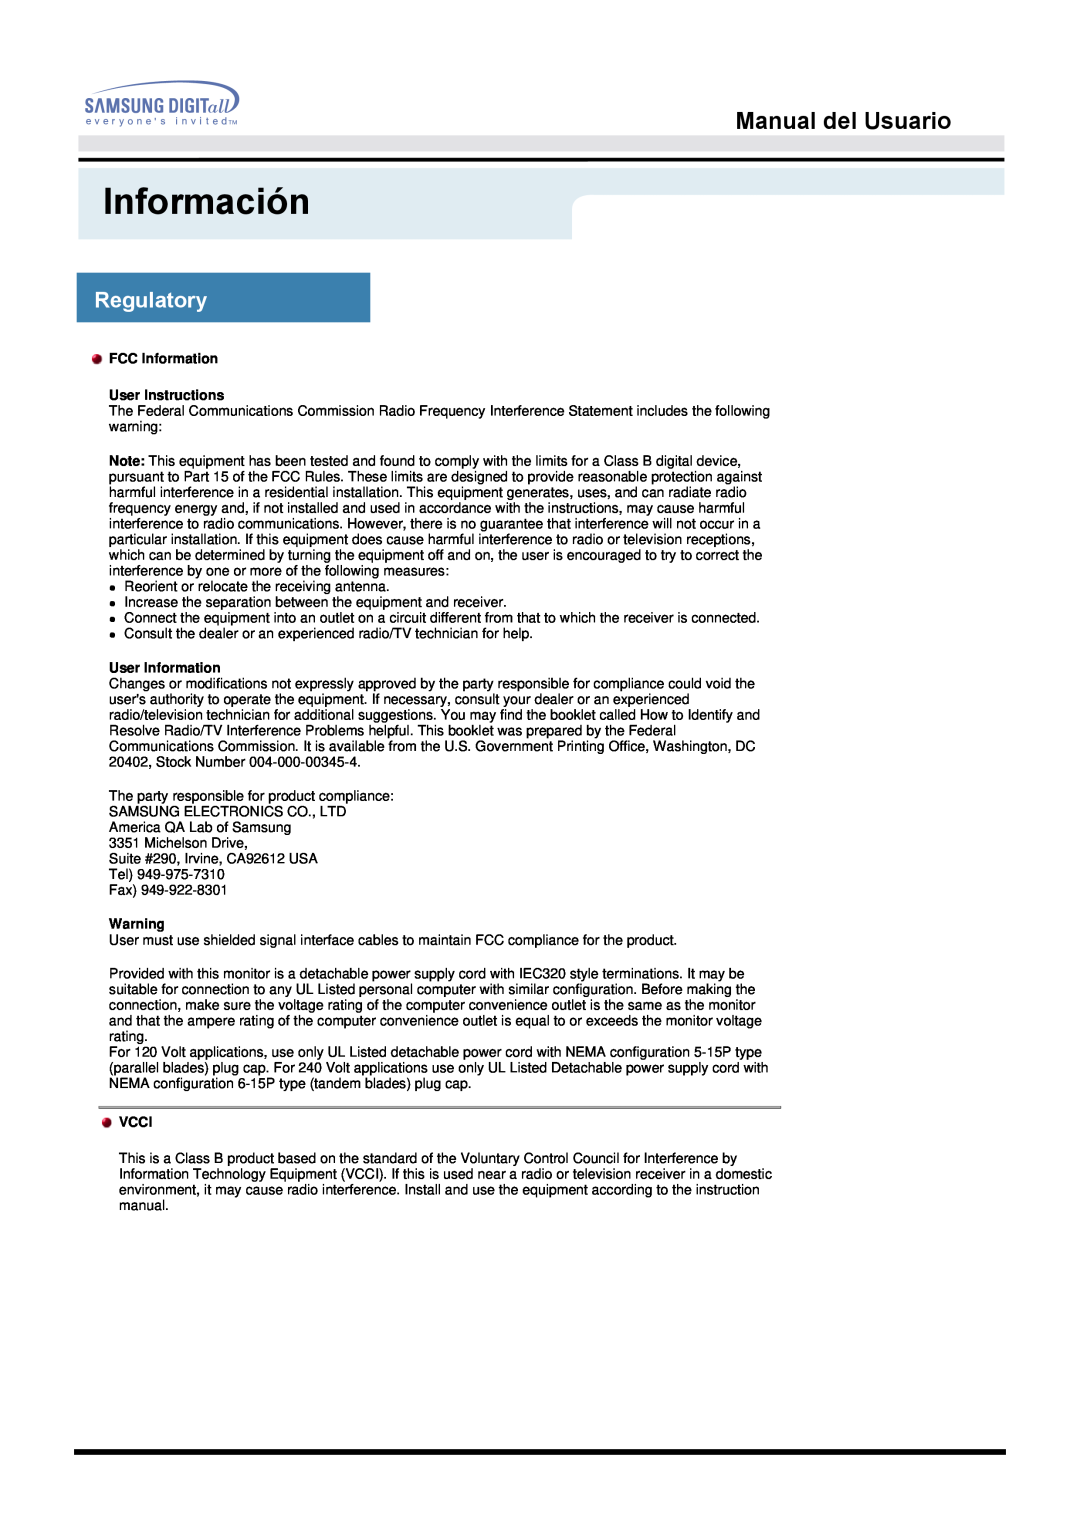 Samsung MO17ESDS/EDC Regulatory, Información, Manual del Usuario, FCC Information User Instructions, User Information 